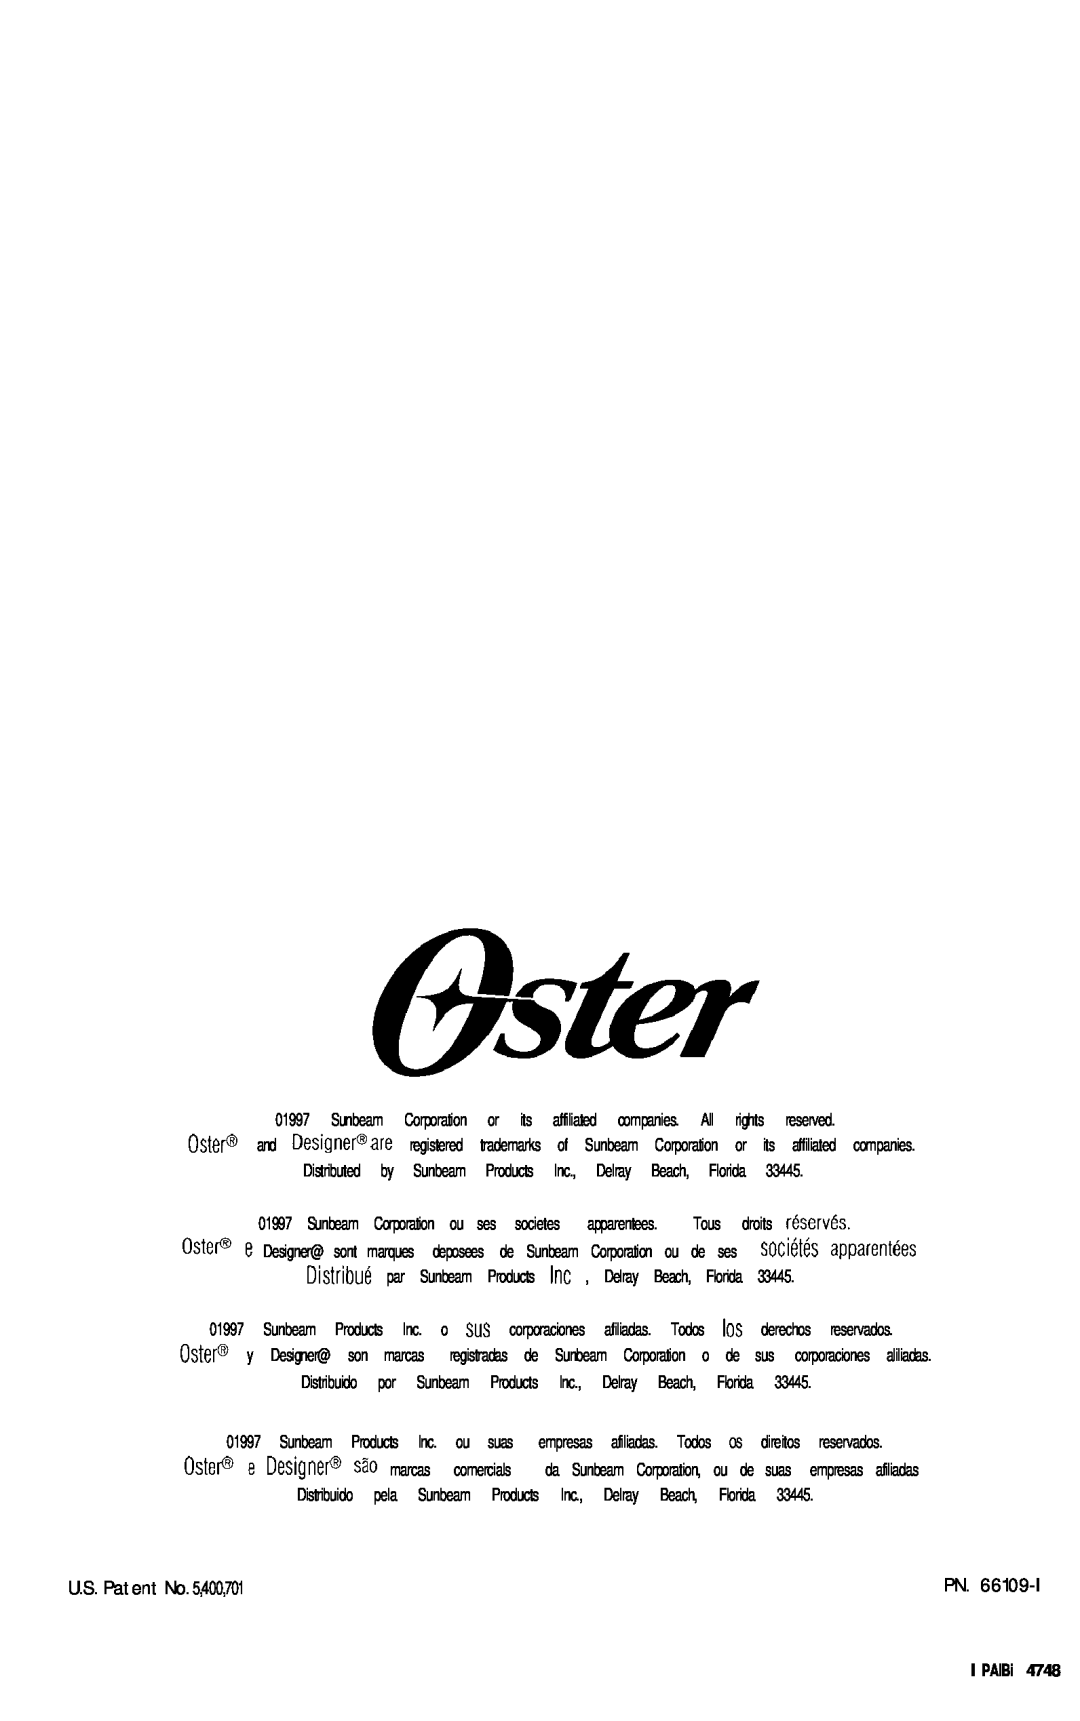 Oster 4711 manual U.S. Patent No. 5,400,701, IPAlBi 